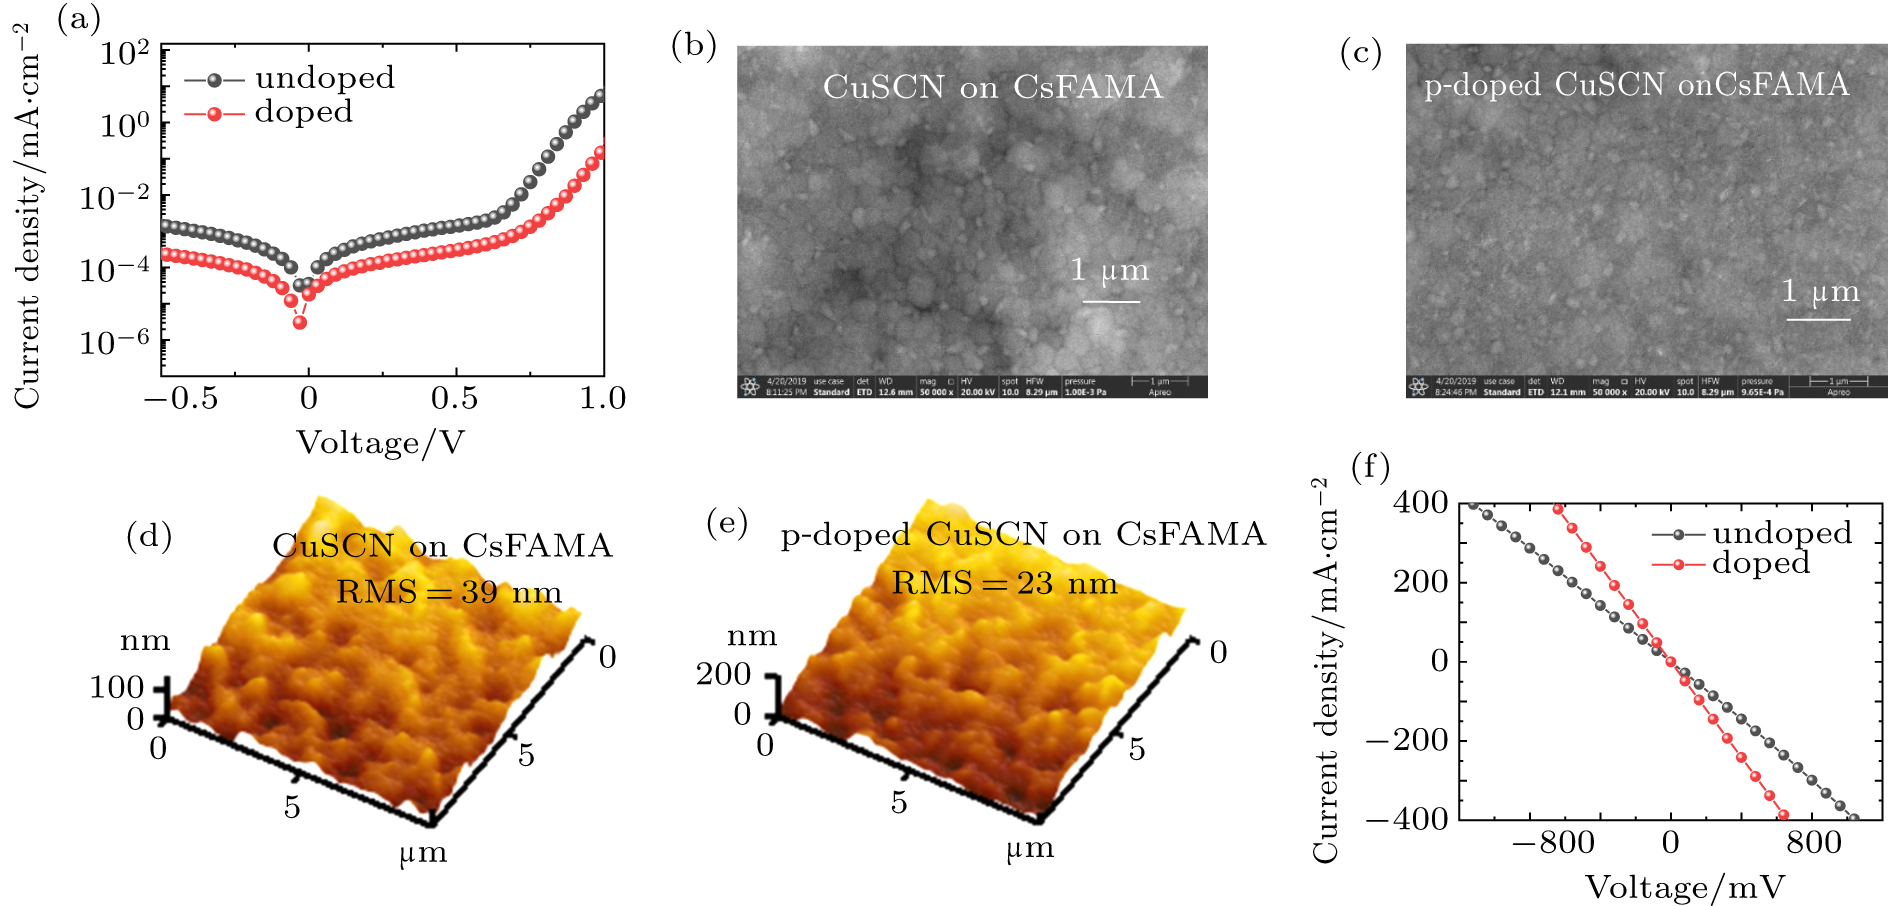 Highly Efficient Bifacial Semitransparent Perovskite Solar Cells Based On Molecular Doping Of Cuscn Hole Transport Layer